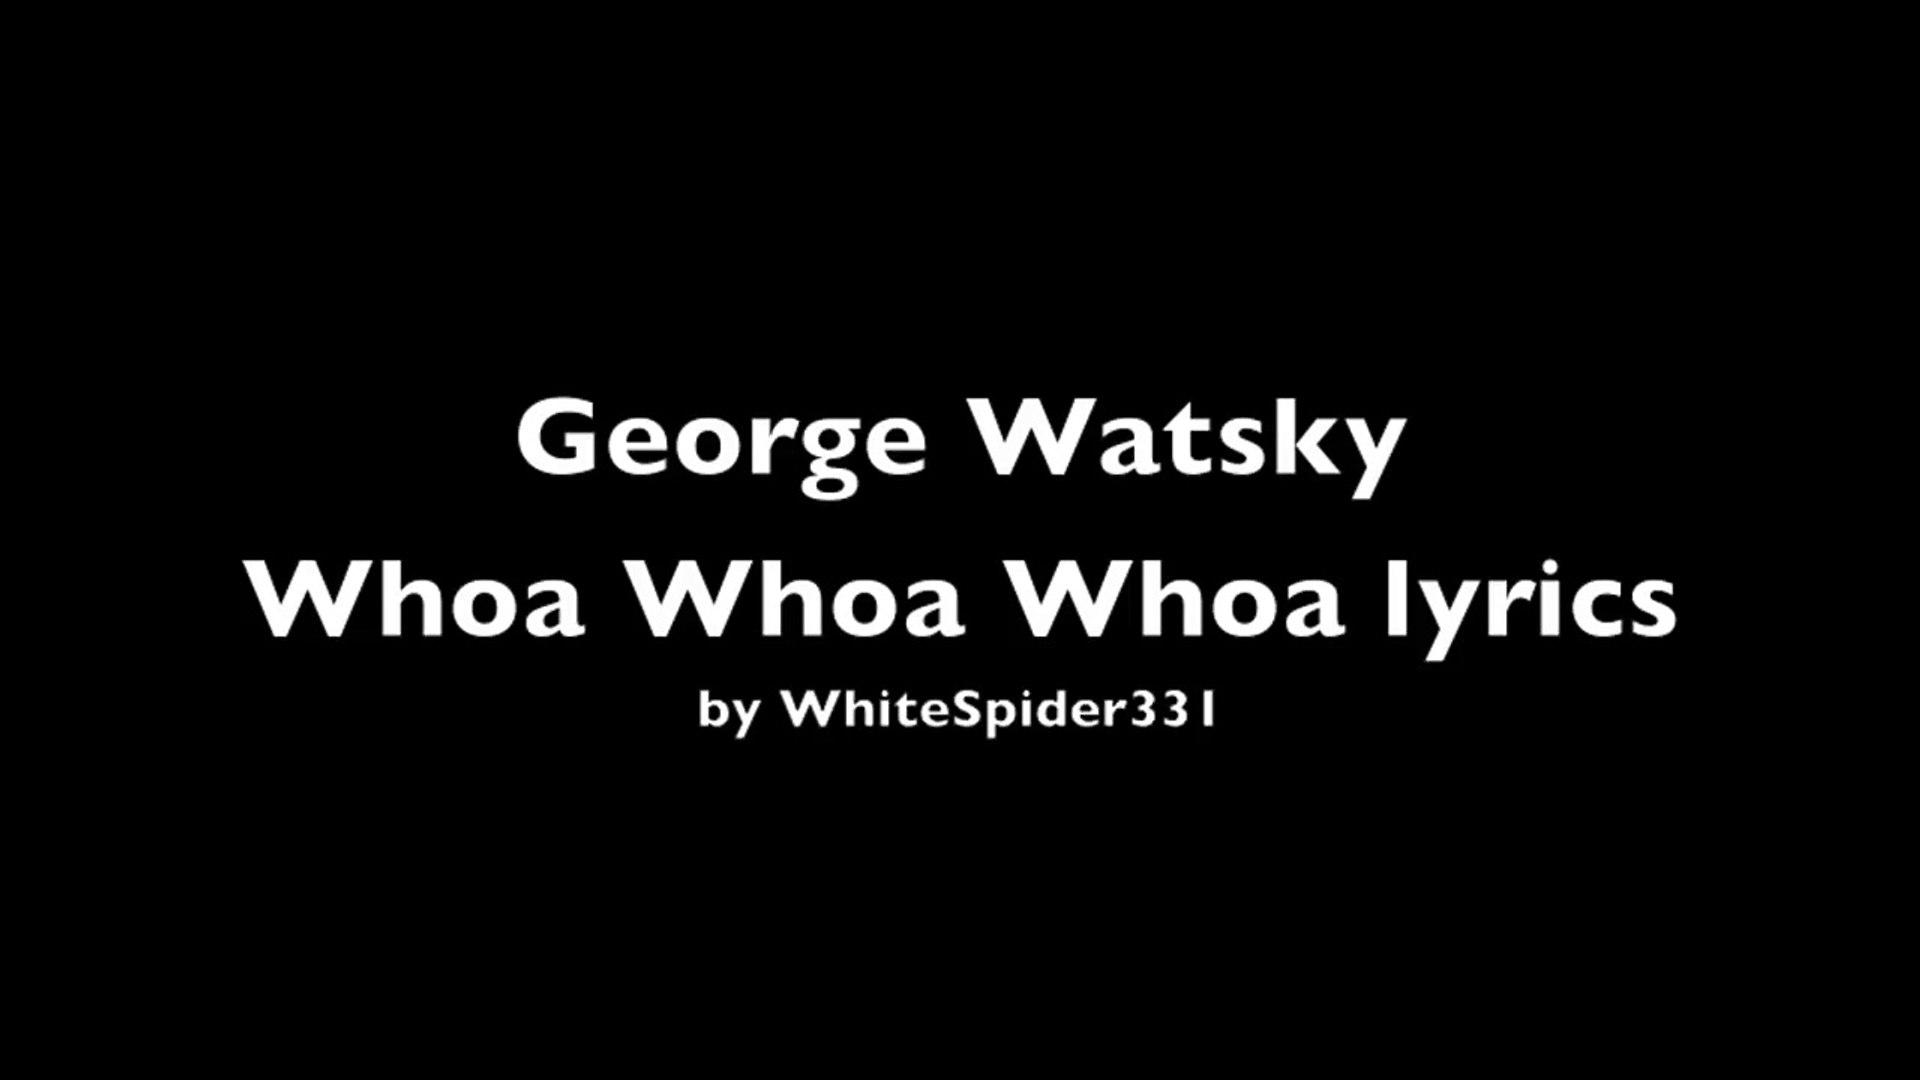 George Watsky Whoa Whoa lyrics